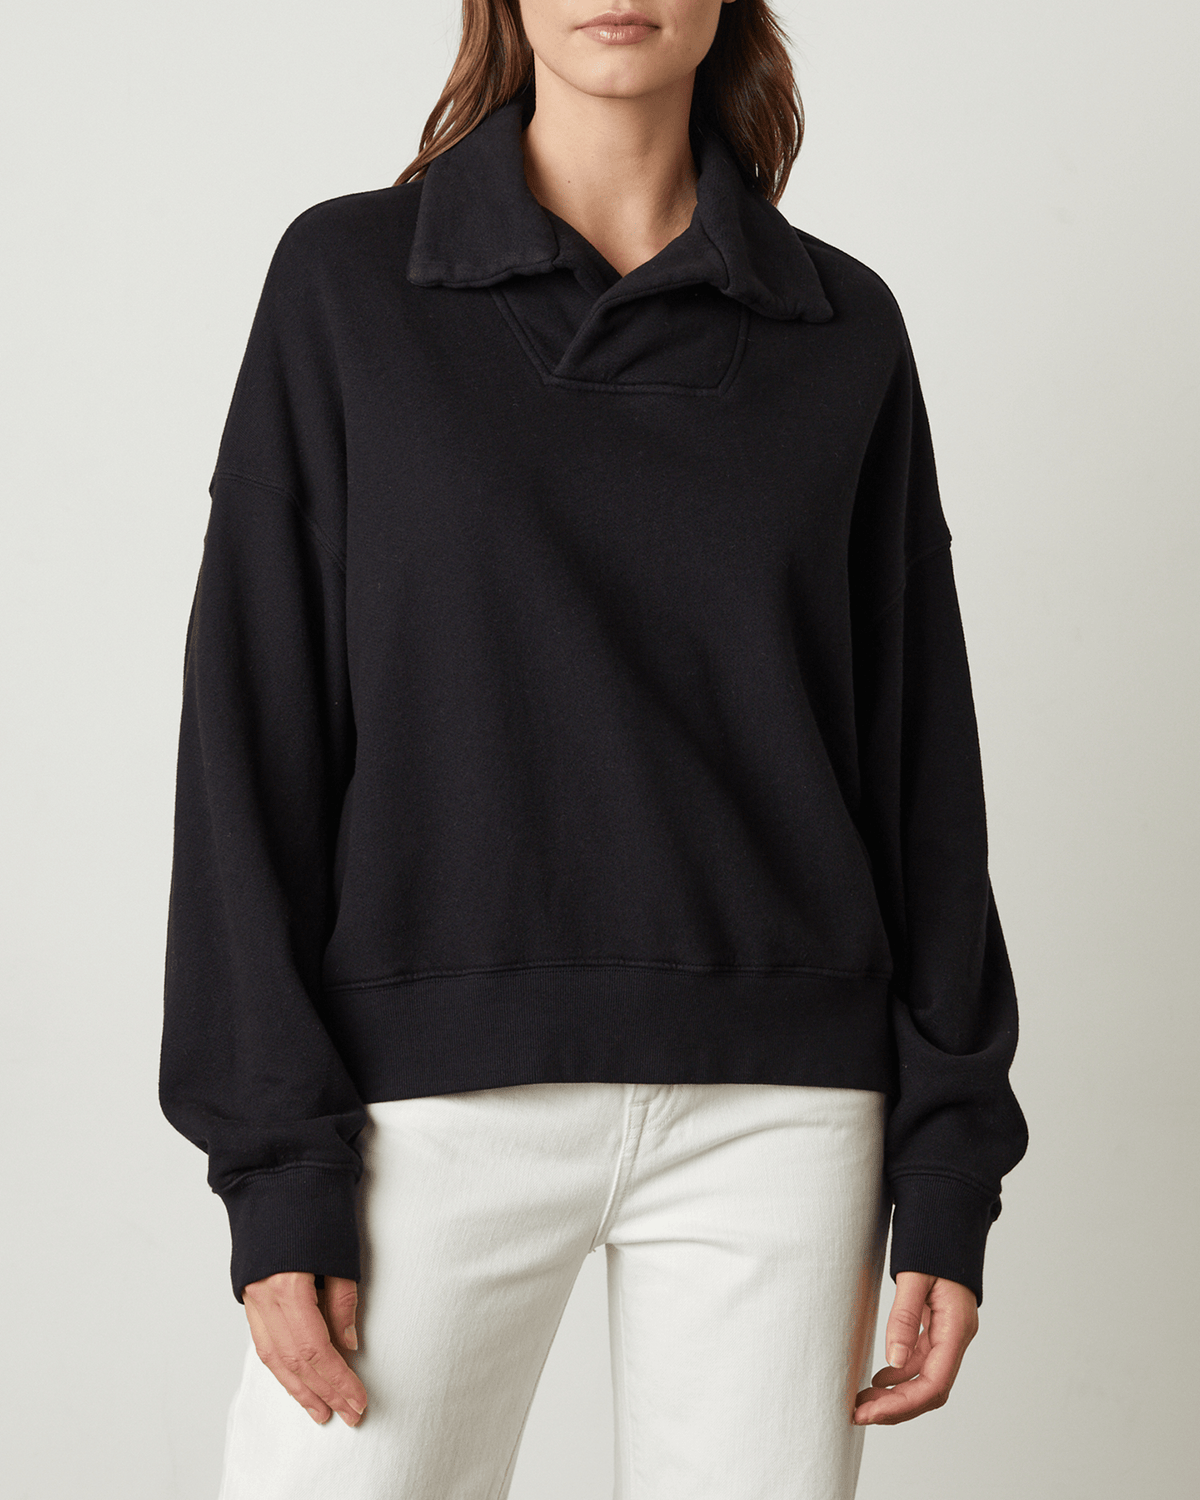 Velvet by Graham & Spencer Clothing Suzie L/S Collar Sweatshirt in Black